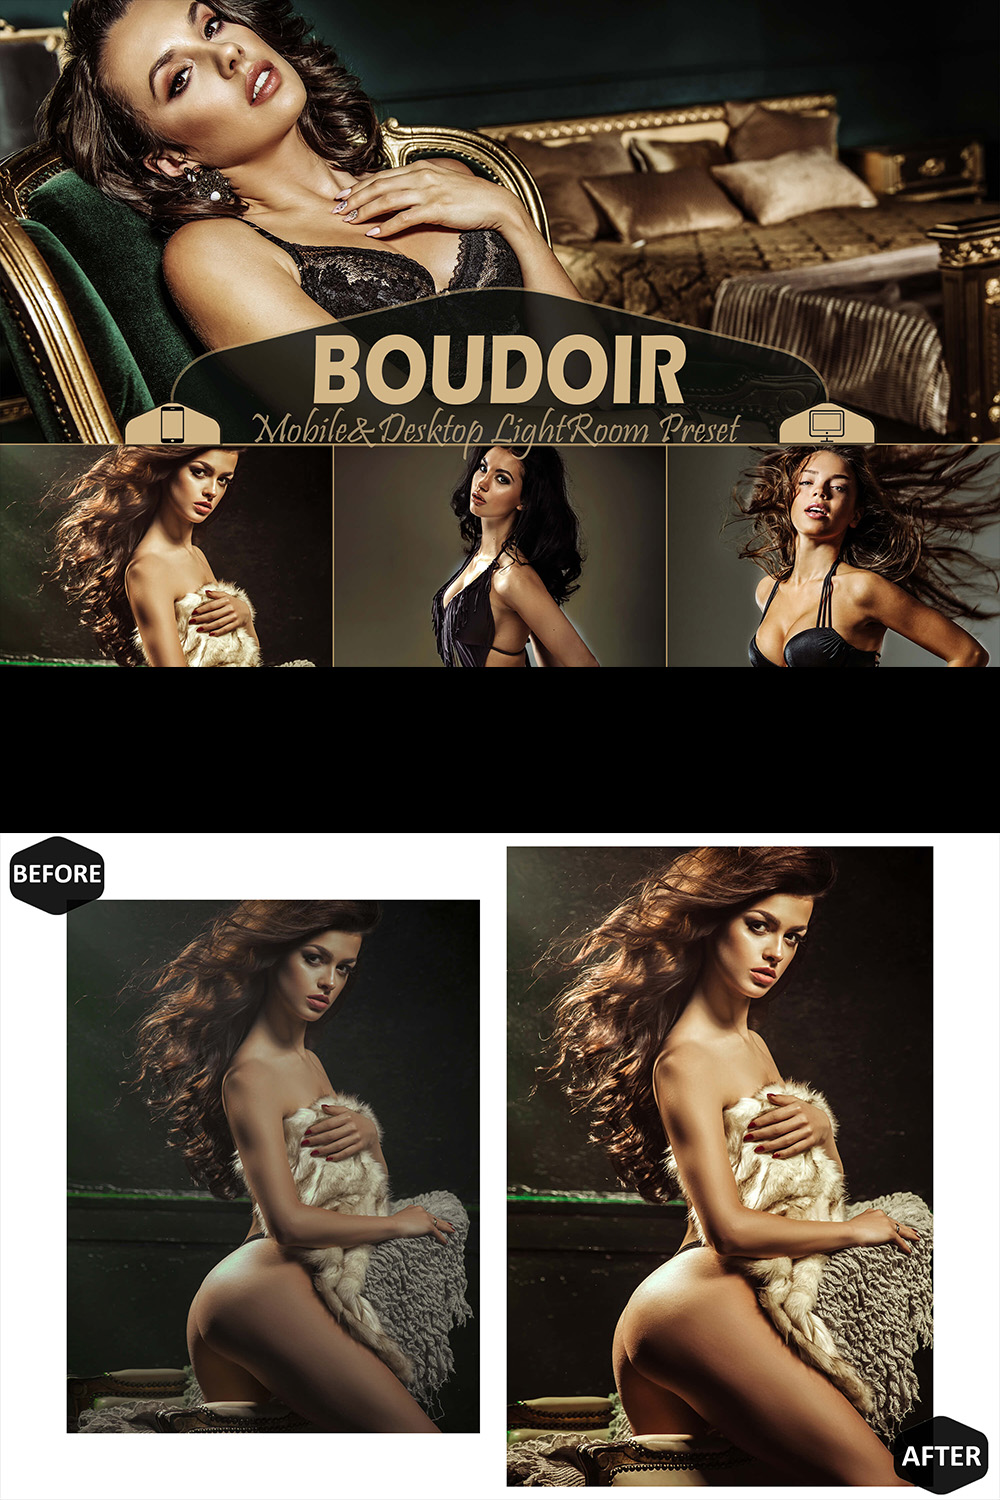 10 Boudoir Mobile & Desktop Lightroom Presets, beauty nude Filter for LR preset, Portrait, DNG Lifestyle Blogger Photography Instagram Theme pinterest preview image.